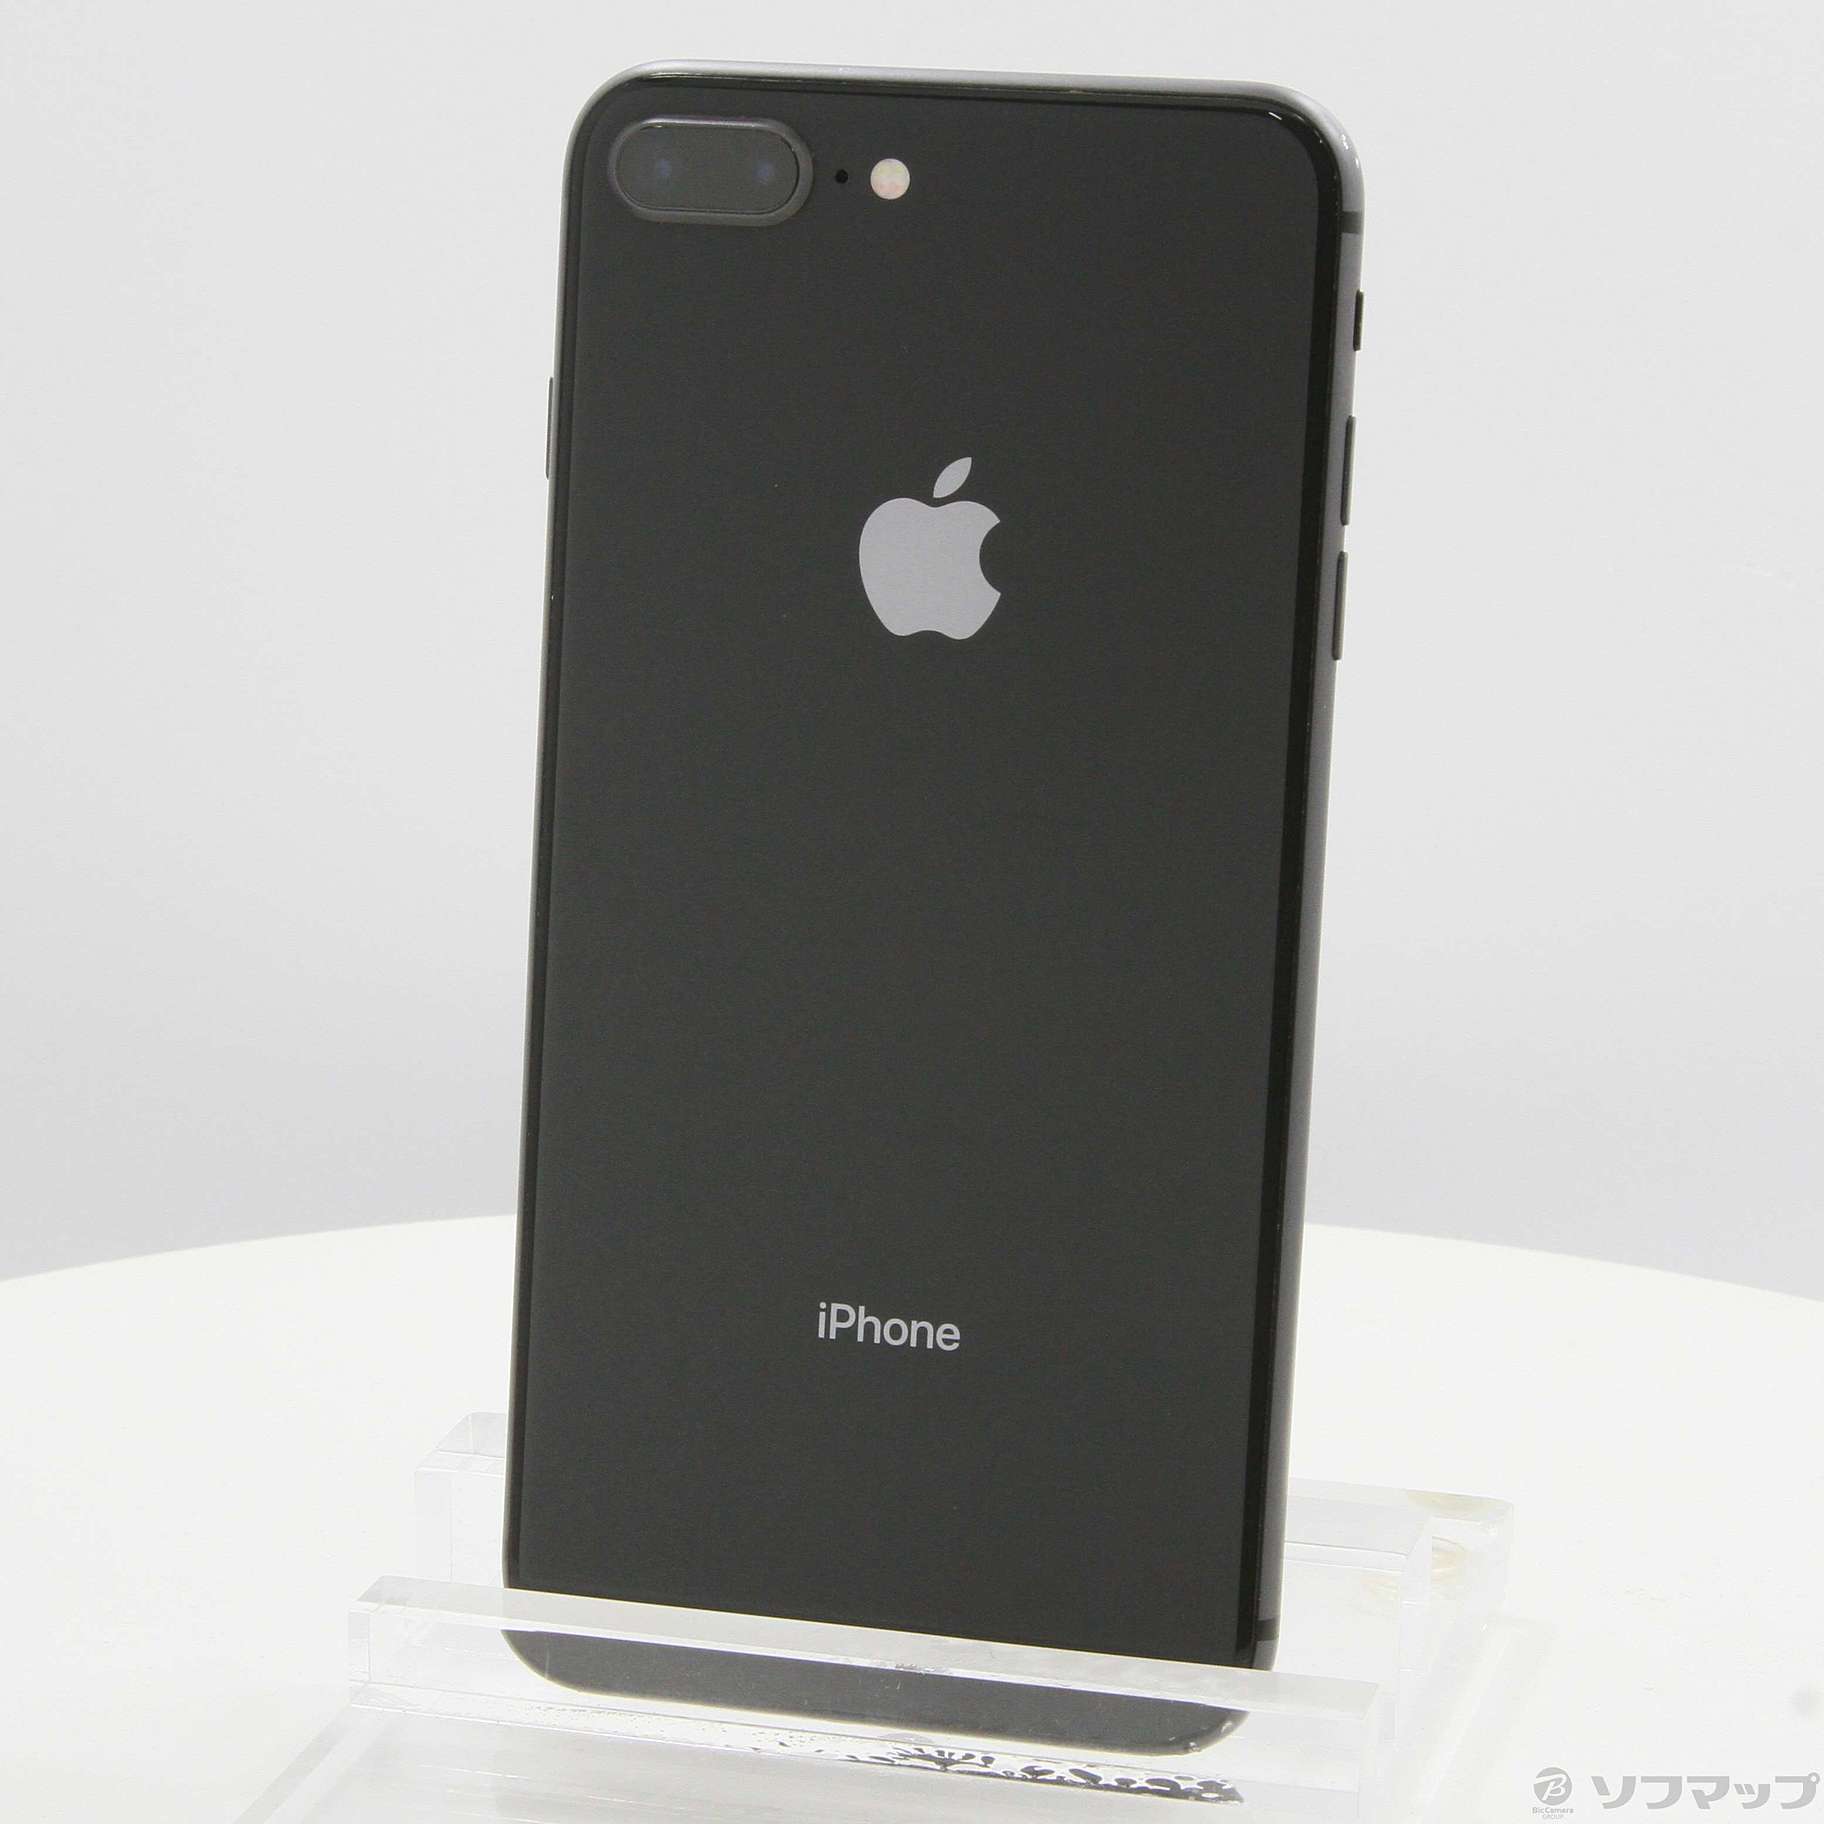 iPhone 8 plus space gray 64GB SIMフリー